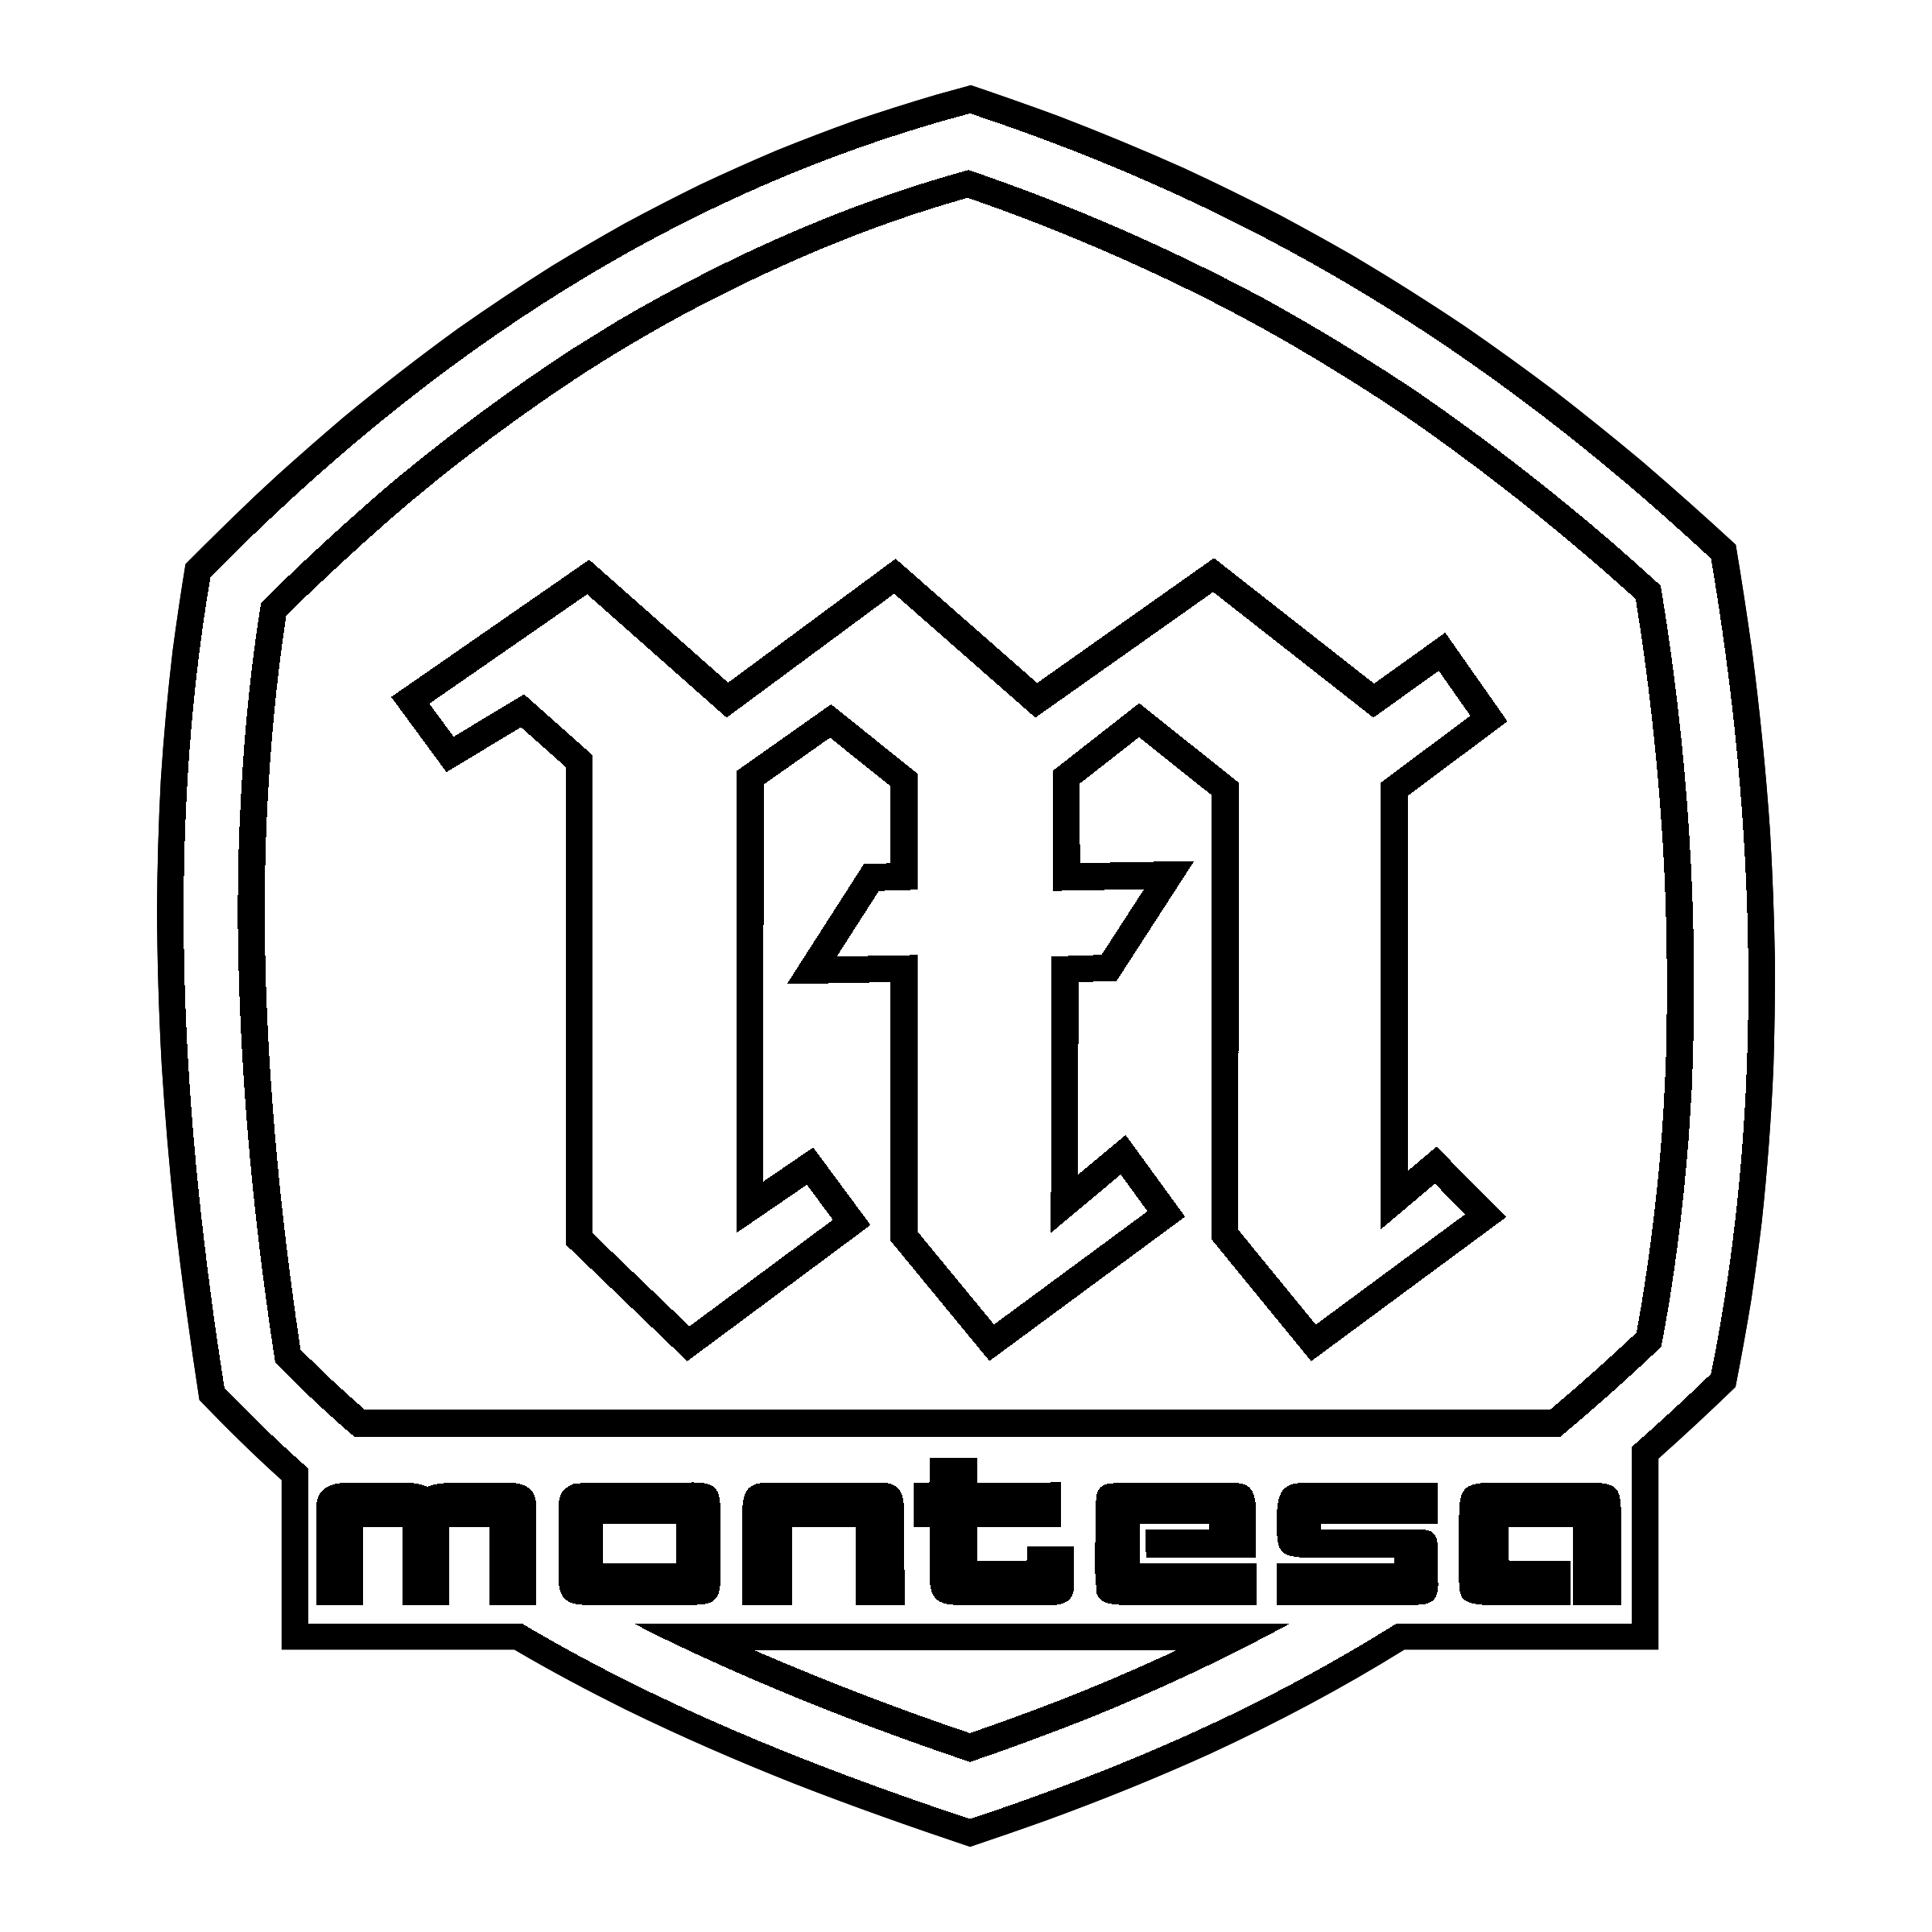 montesa-logo-black-and-white.png